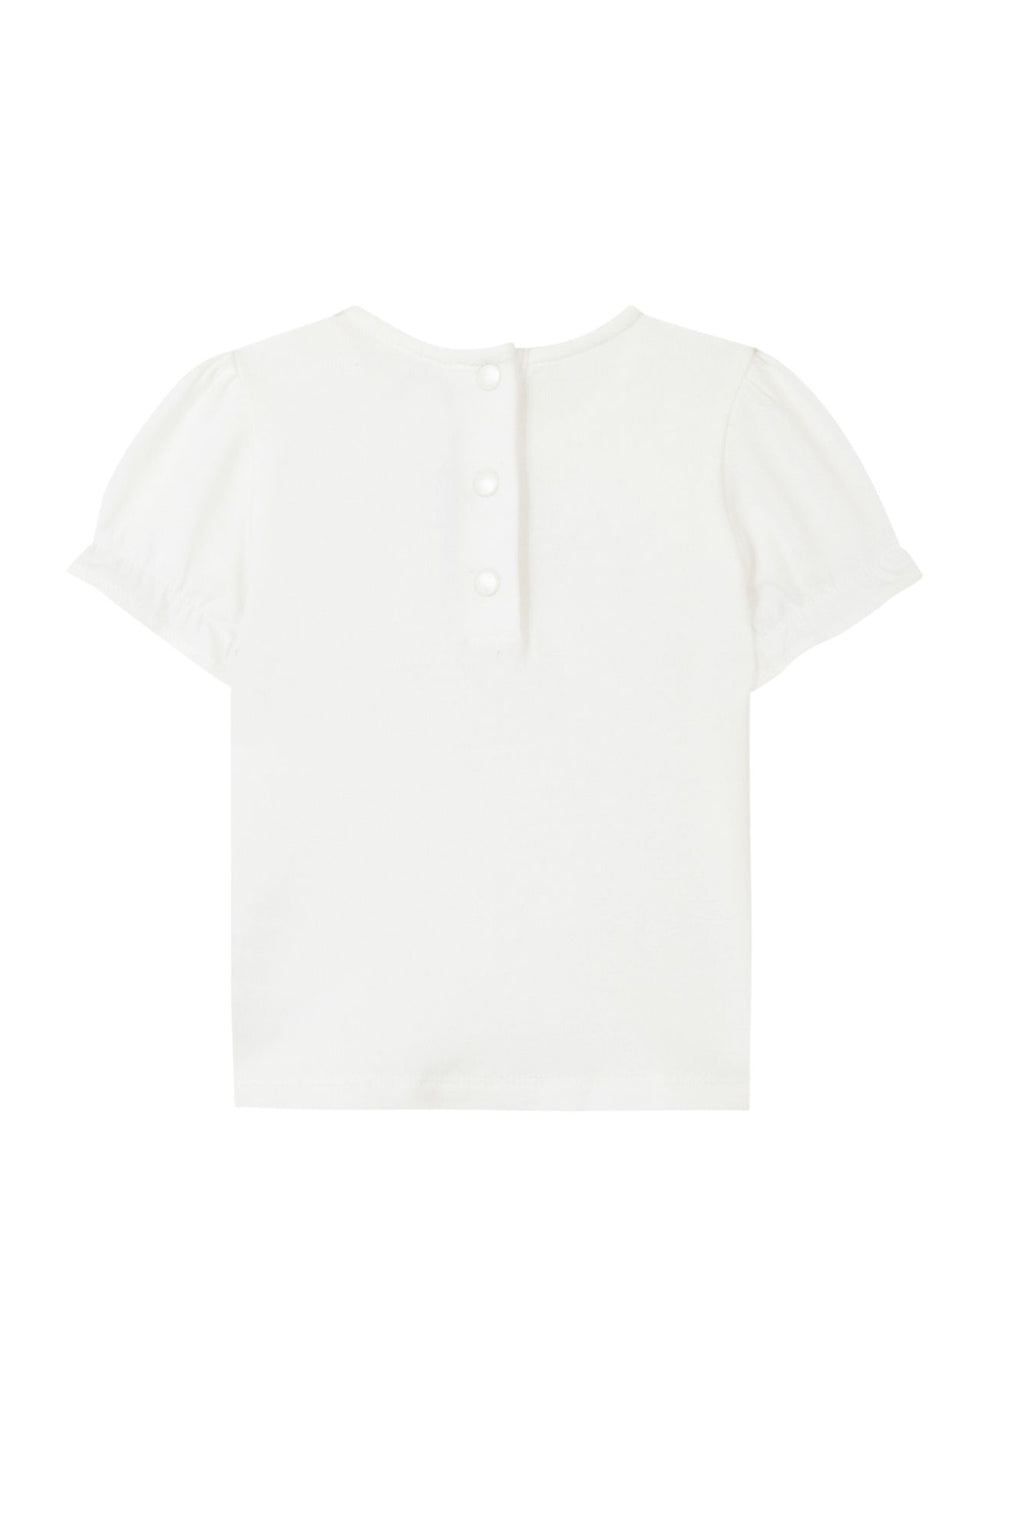 Tee-shirt - Jersey blanc trèfle